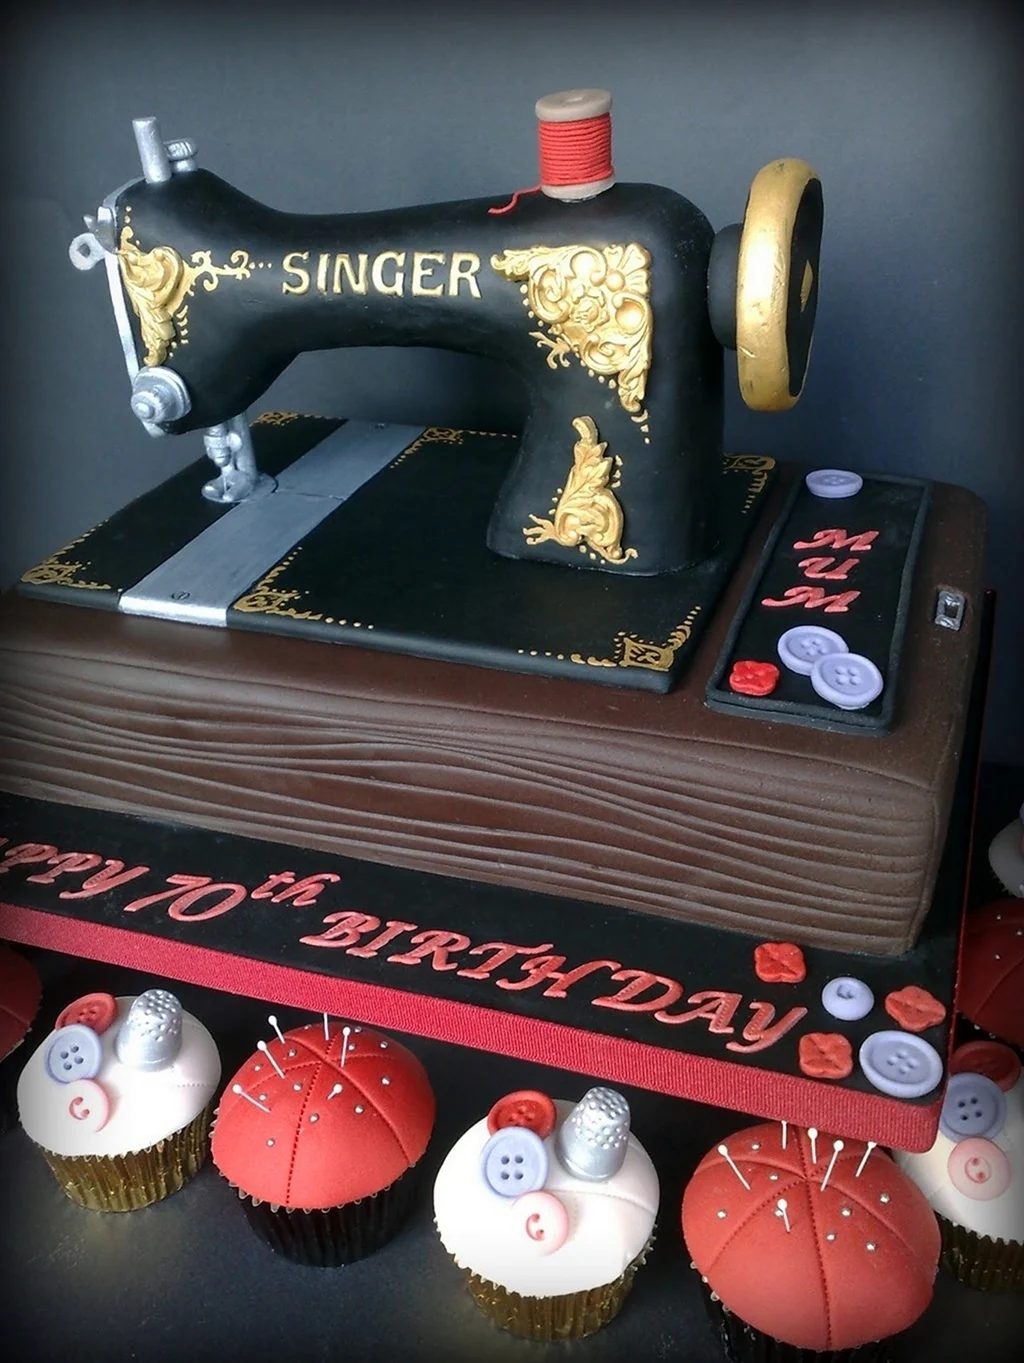 Торт швейная машинка Зингер мастер класс. Красивая картинка